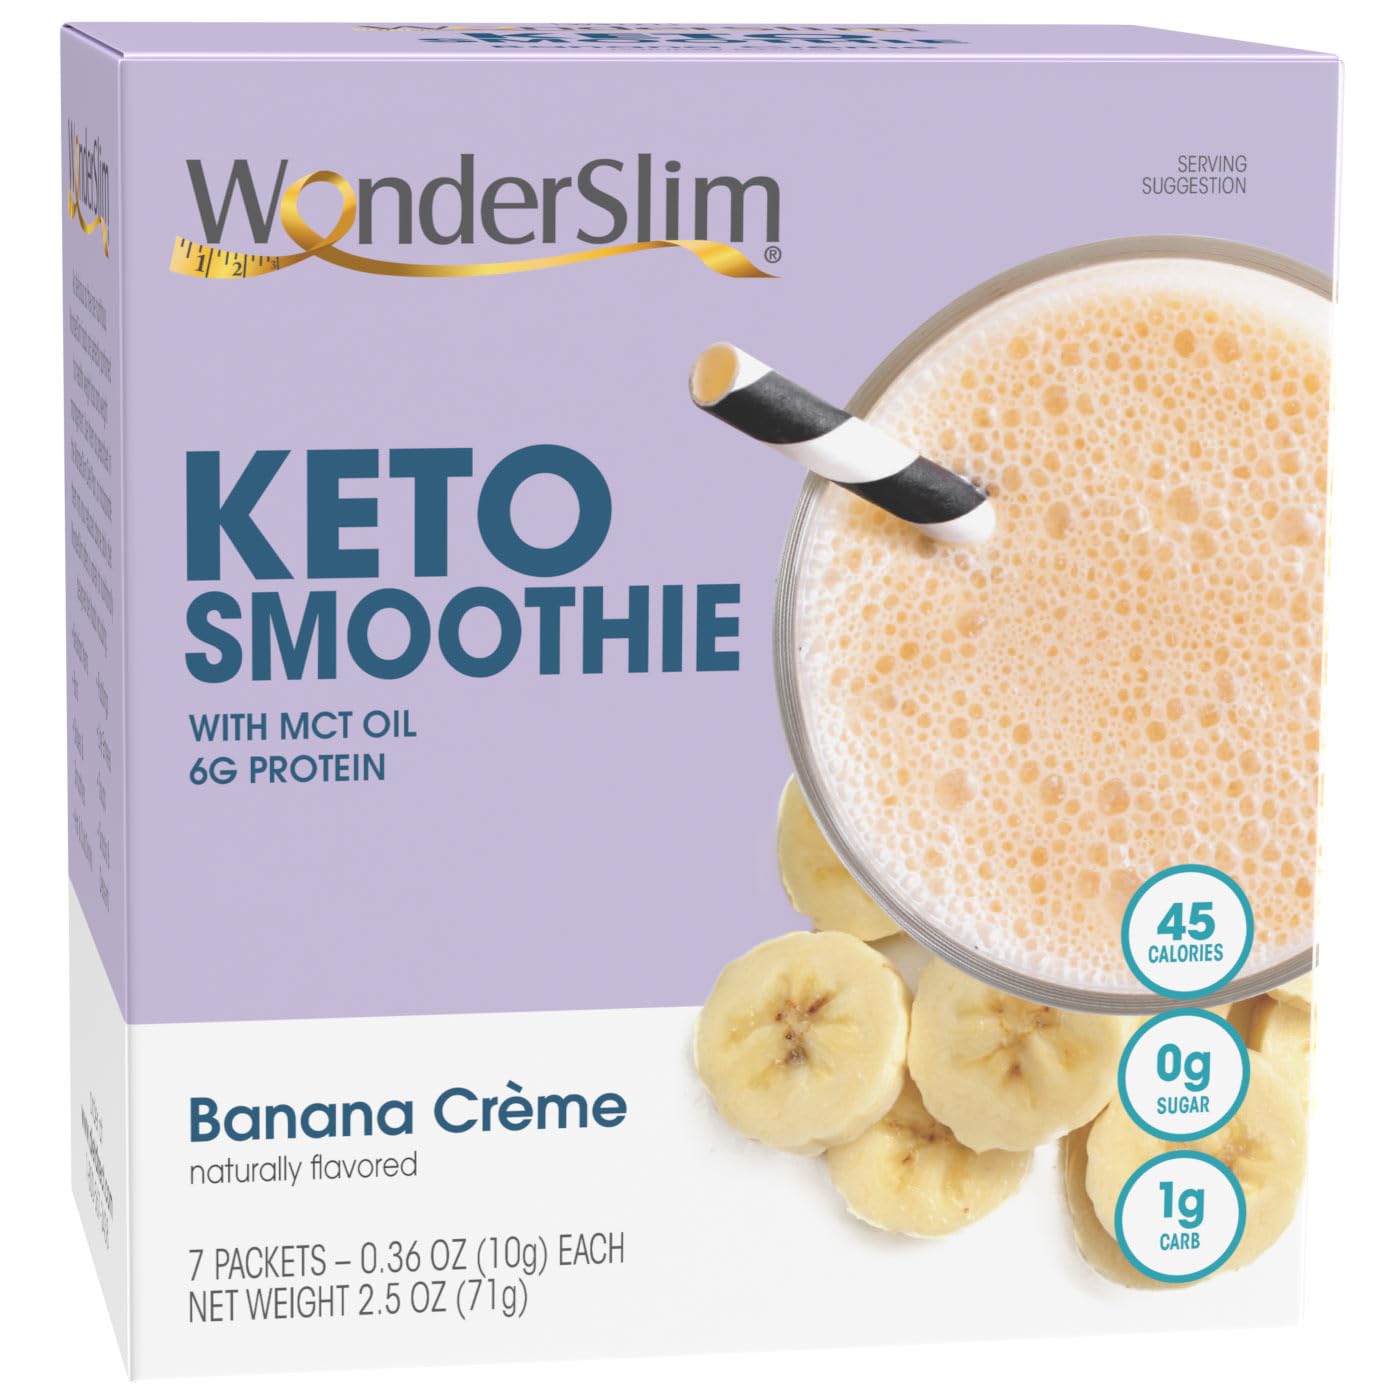 WonderSlim Keto Smoothie with C8 MCT Oil, Banana Crème, Low Carb, No Sugar, Gluten Free (7ct)